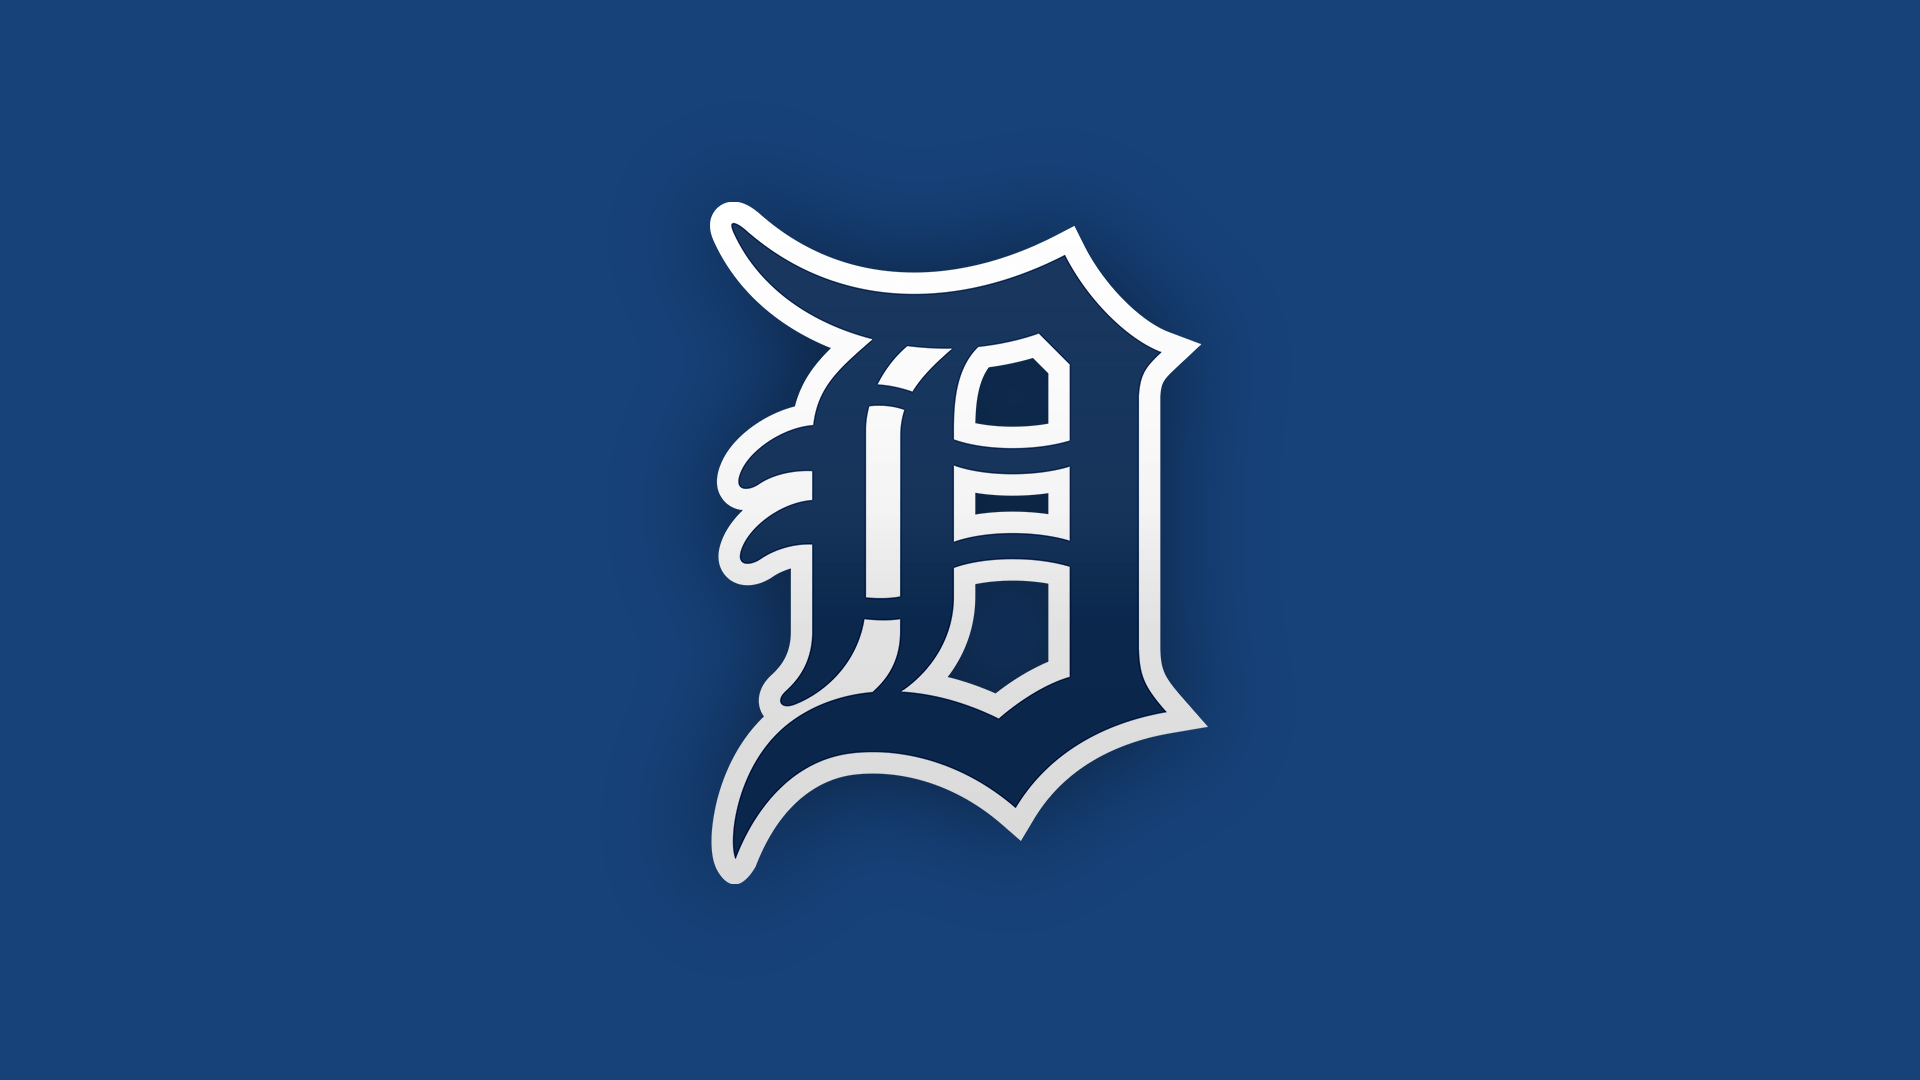 2023 Detroit Tigers wallpaper – Pro Sports Backgrounds